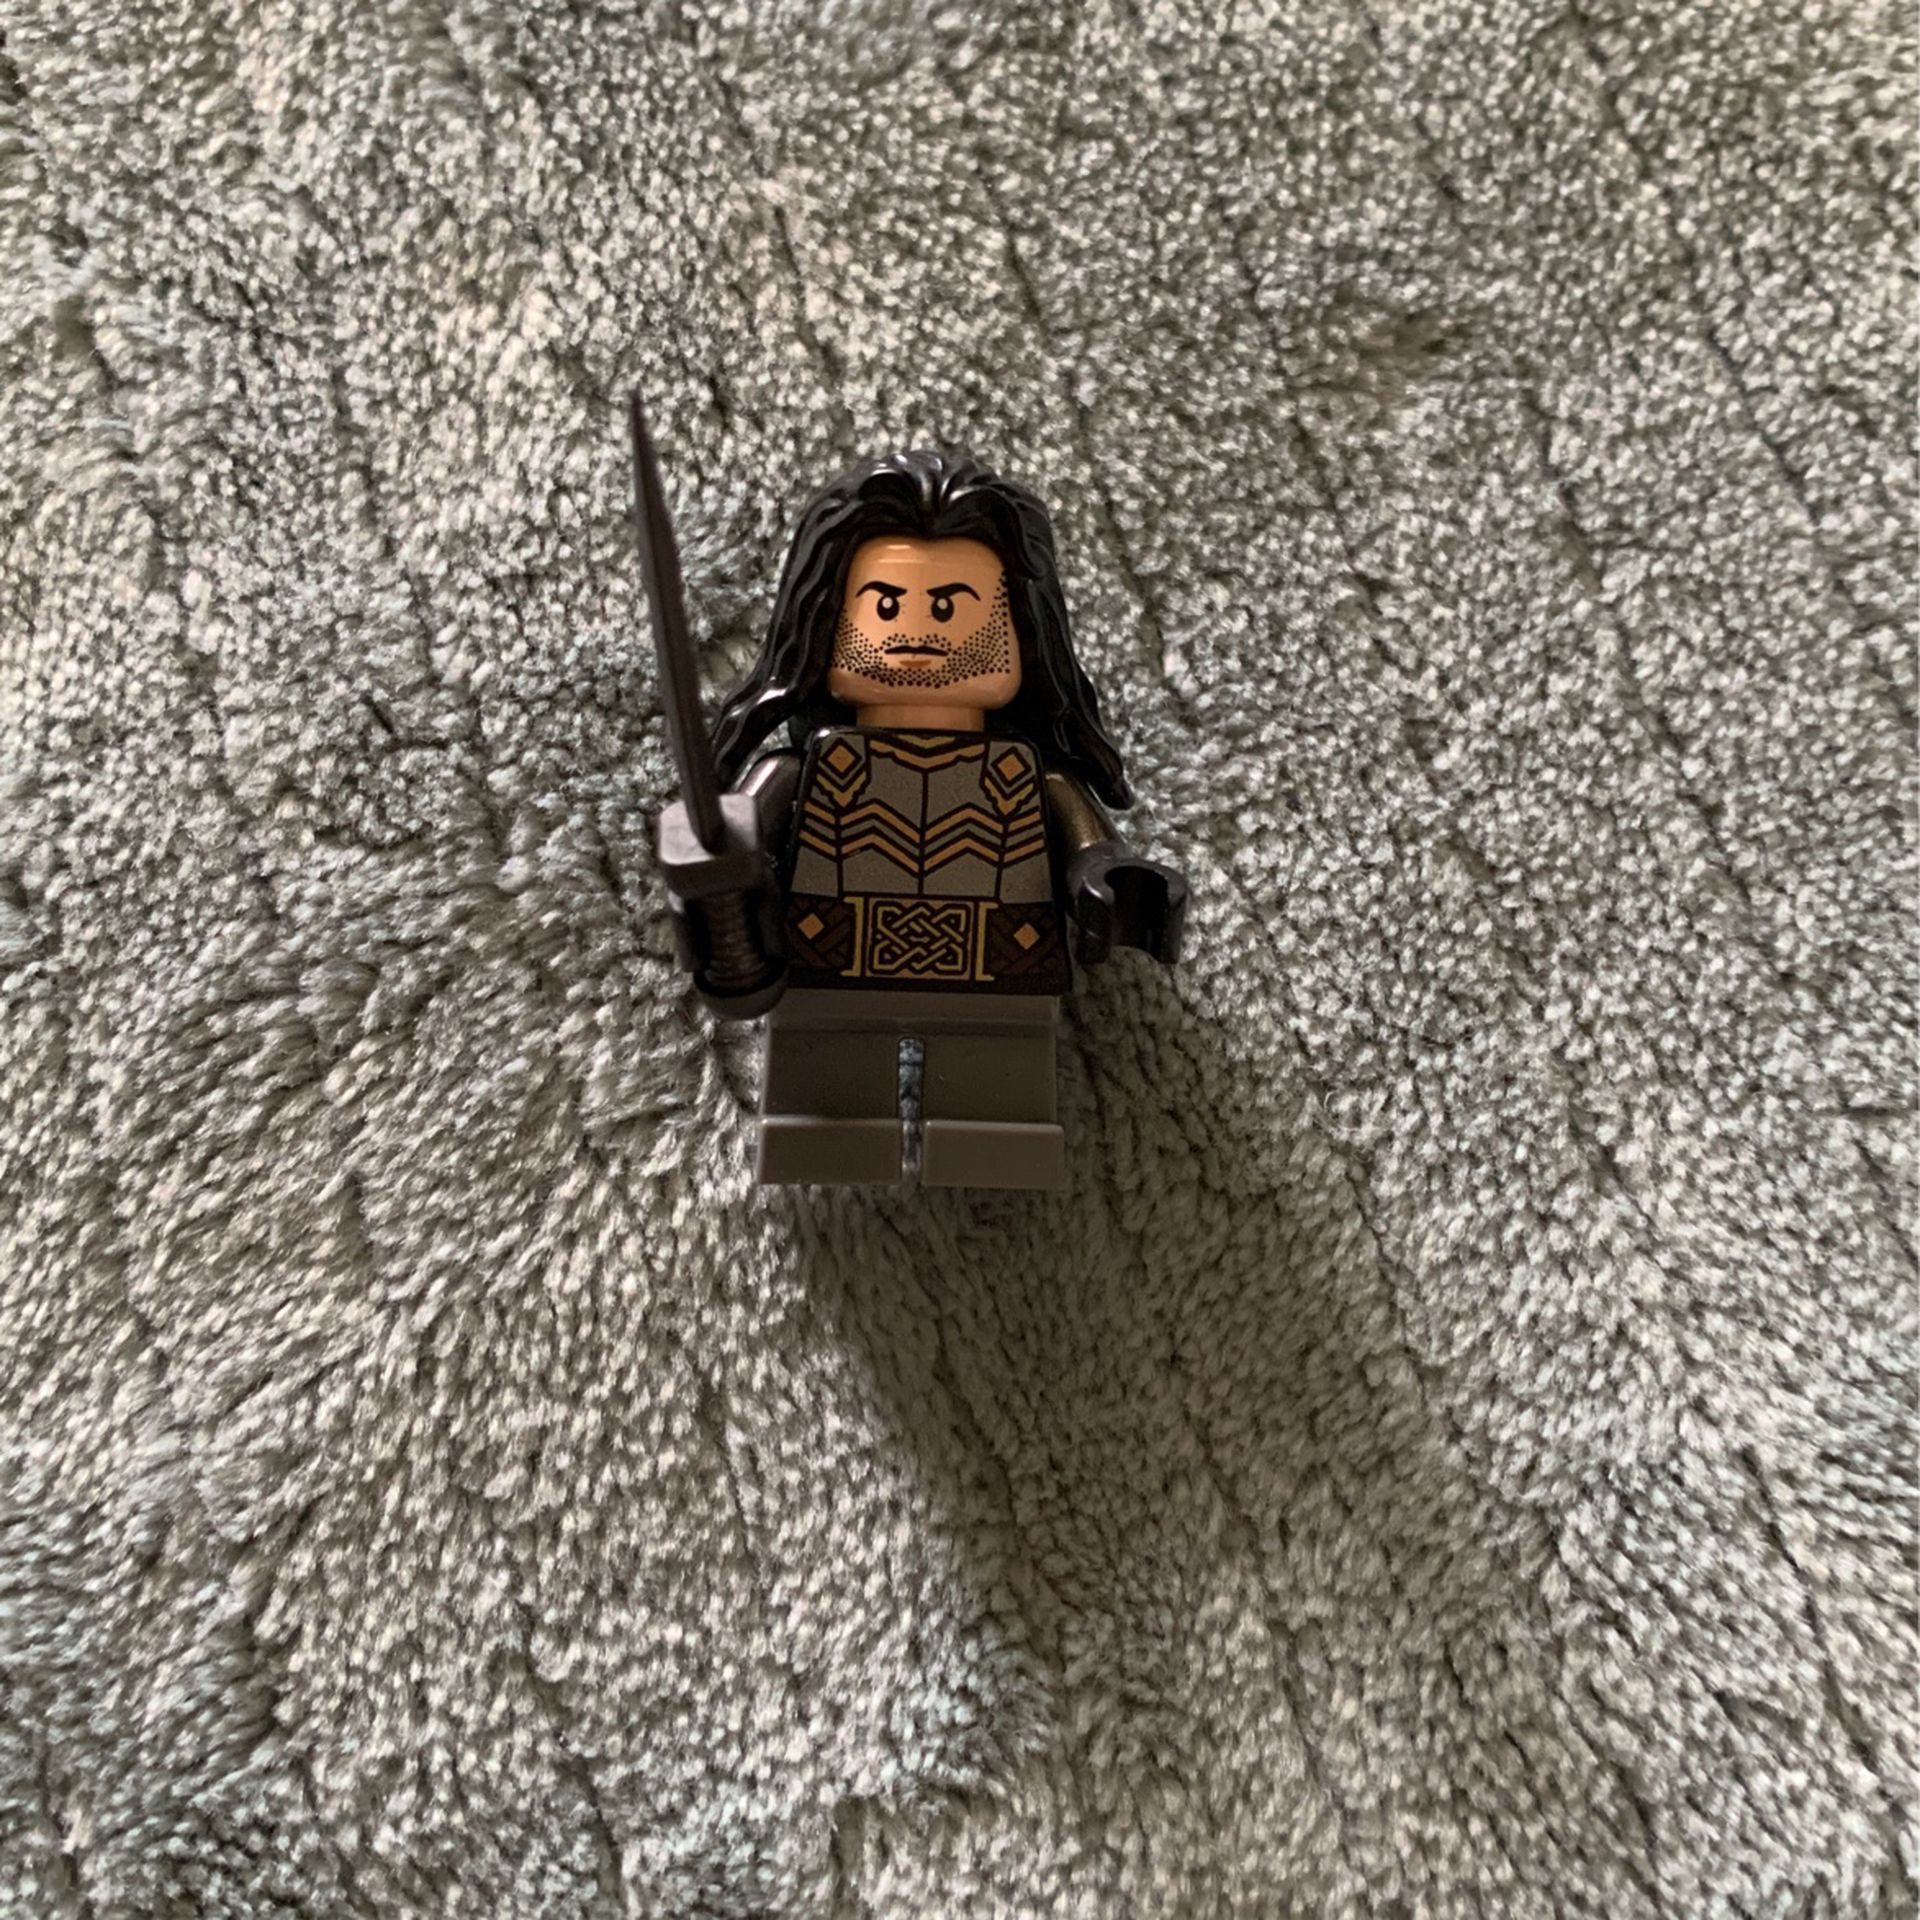 LEGO Hobbit Kili The Dwarf Sale in Wildomar, CA - OfferUp